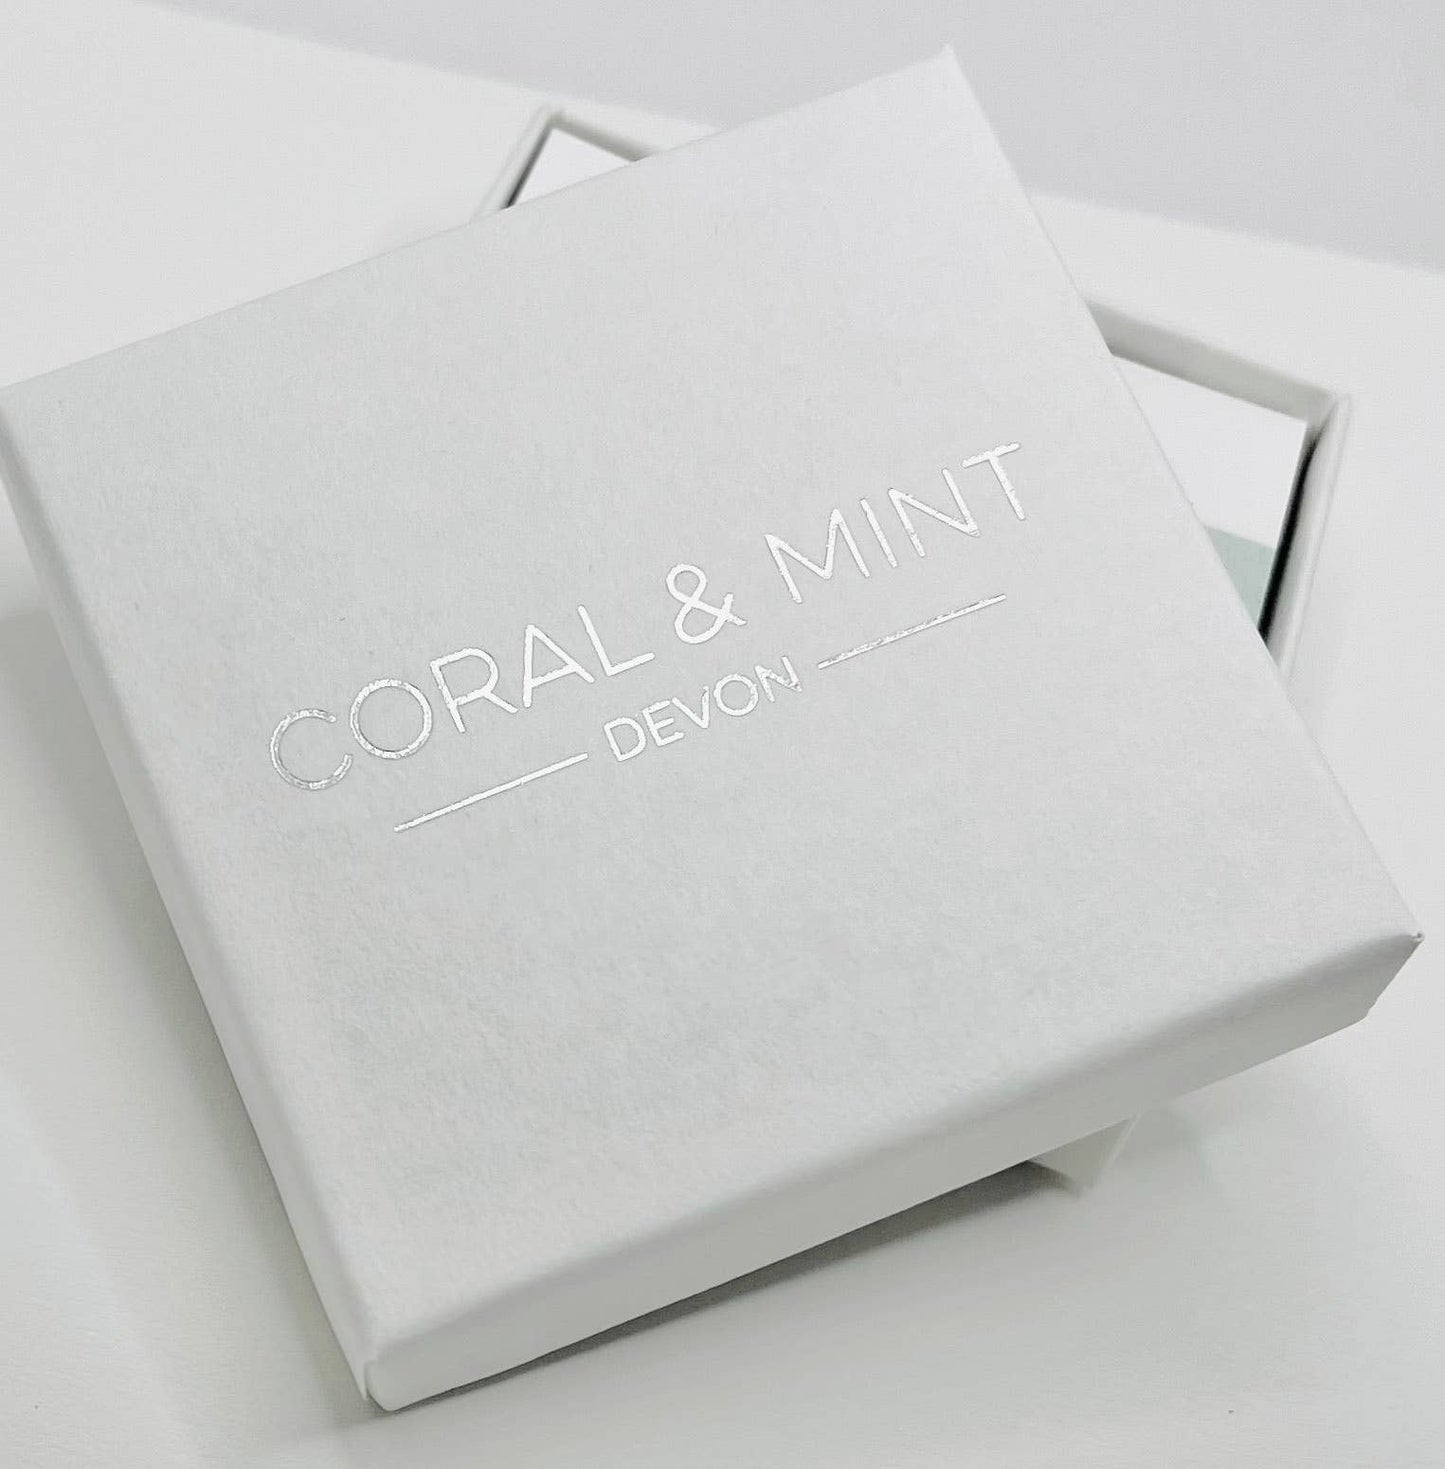 Coral and Mint - Mini Heart Studs - Emerald Sparkle Enamel